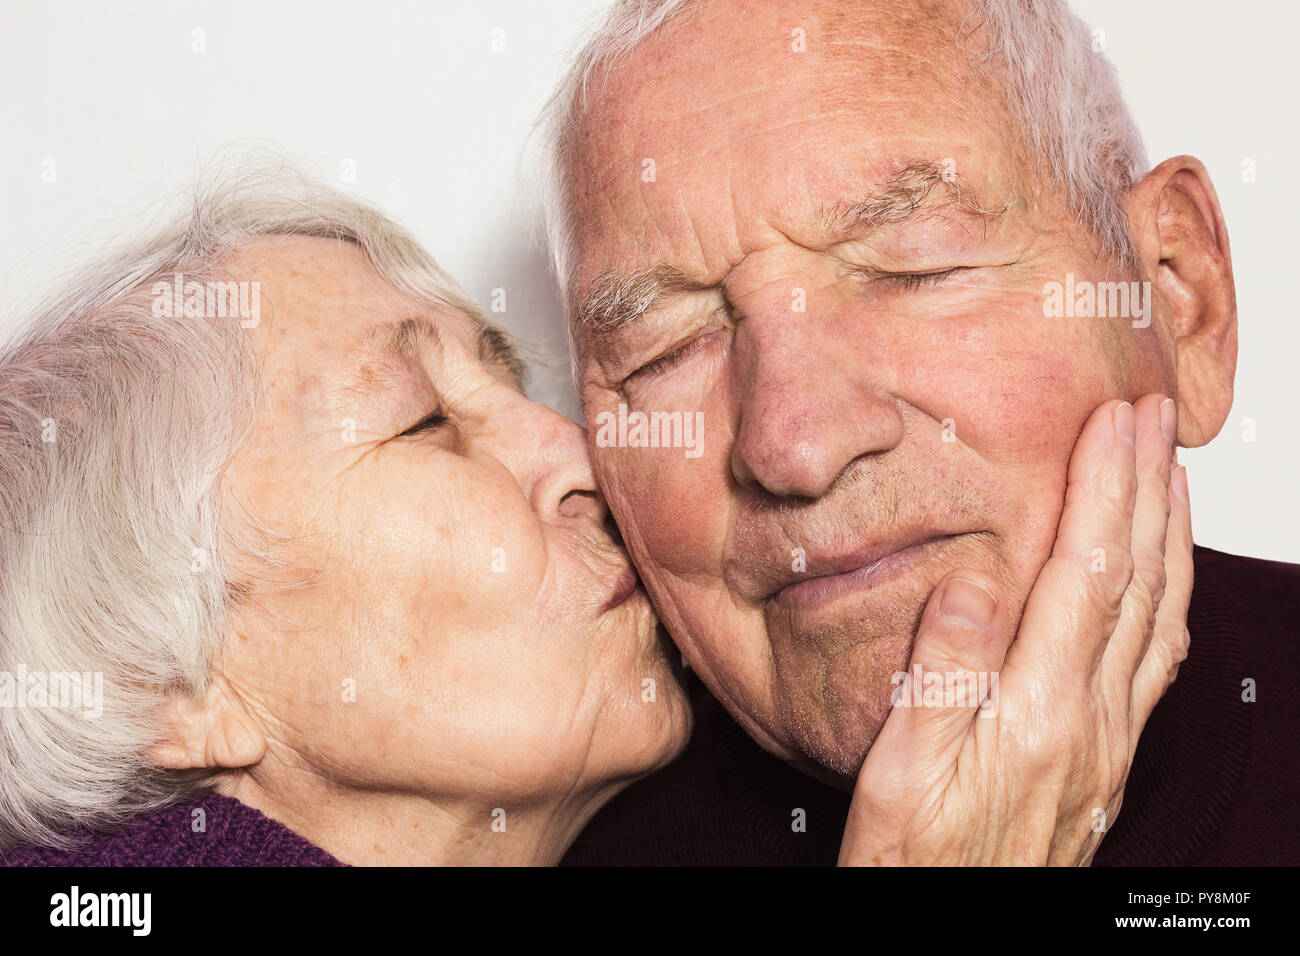 Kissing old men 5 Key